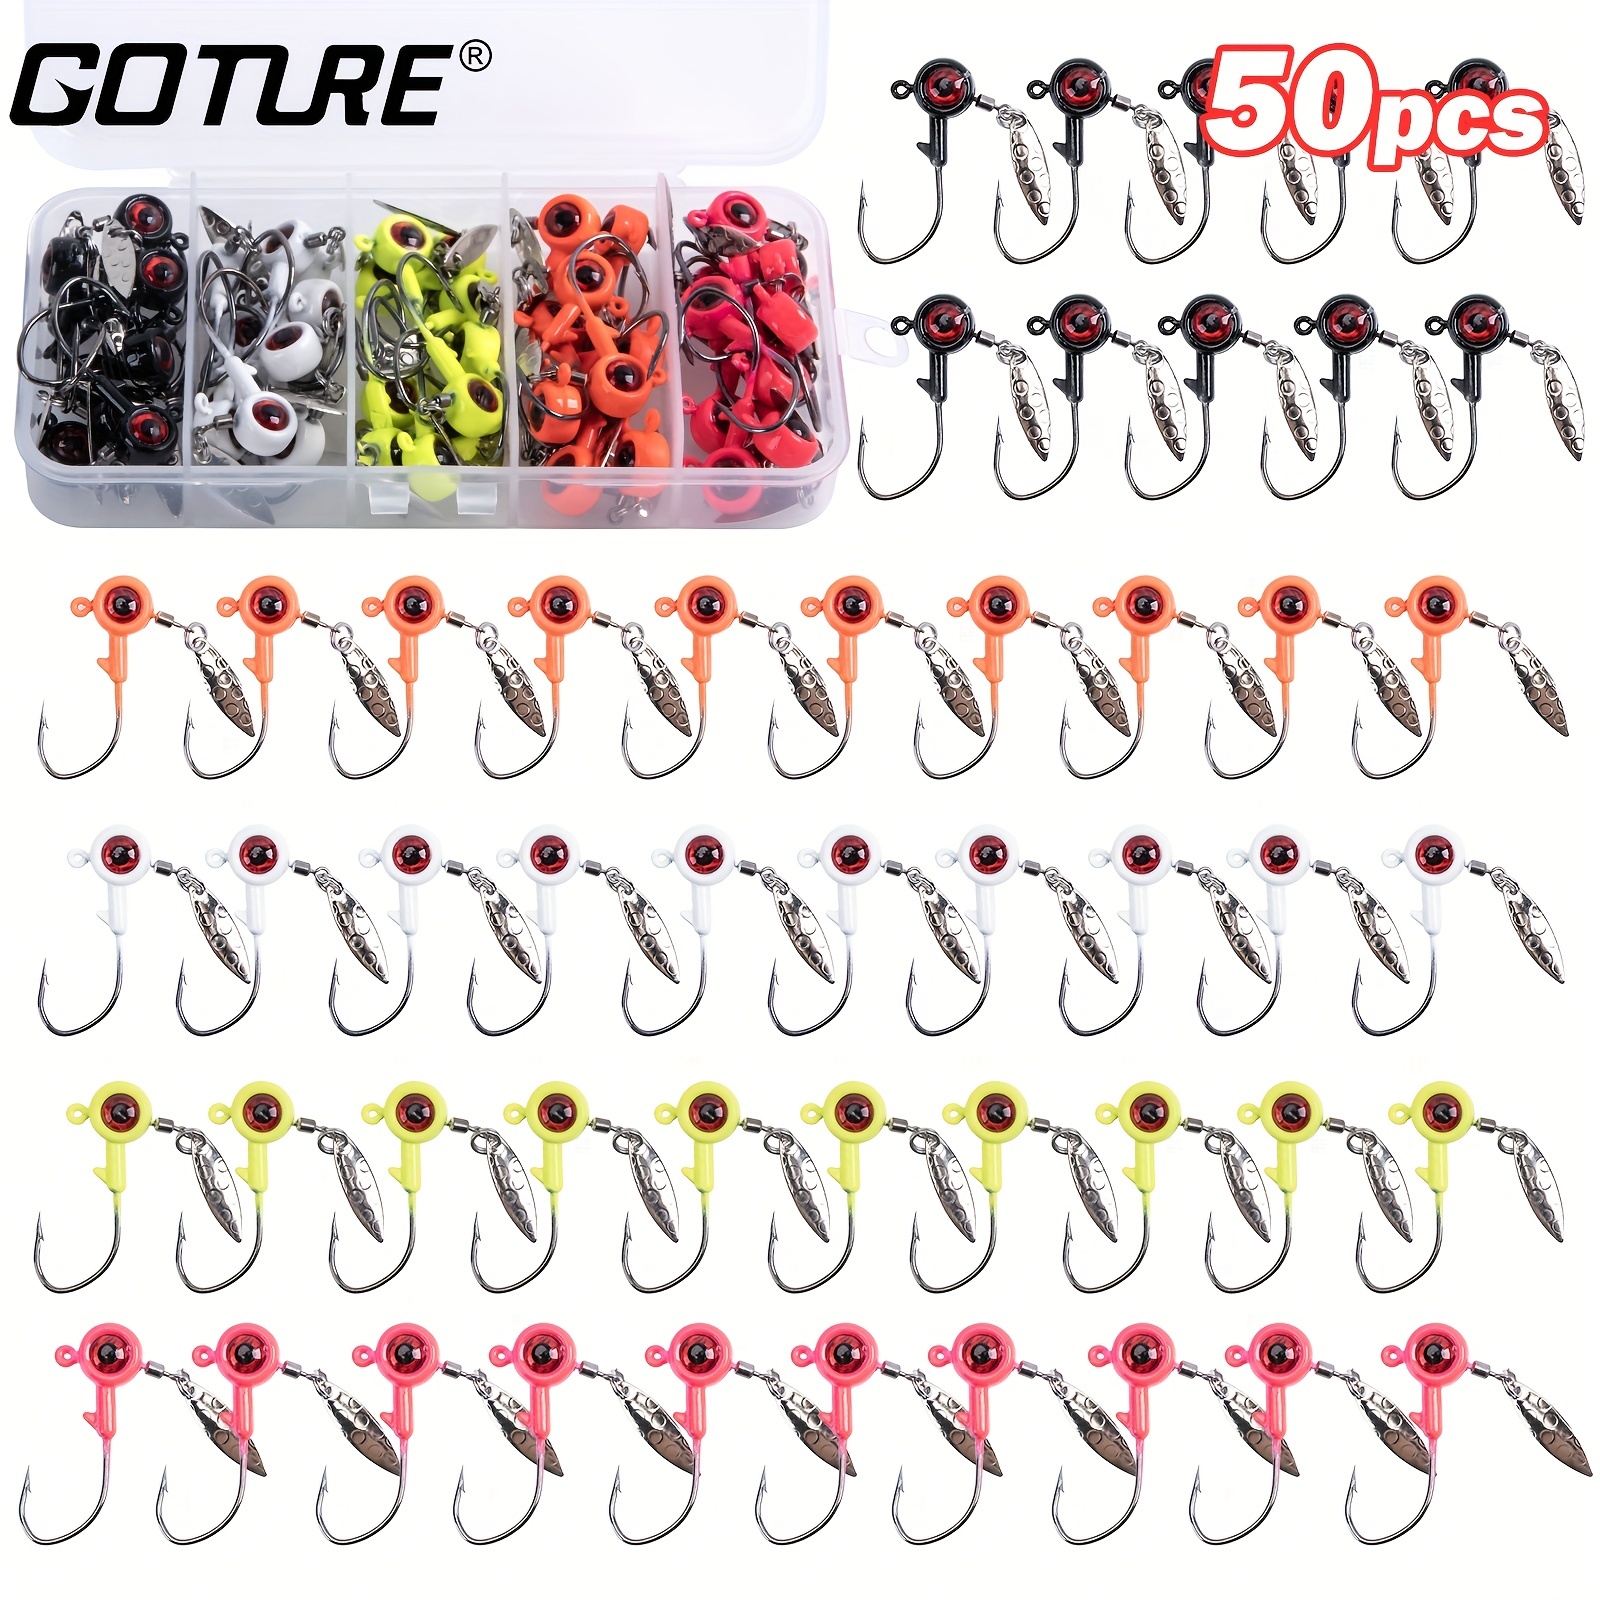 

Goture 50pcs Colorful Round Lead Fishing Hooks Kit, Sequin Spinner Bait Jig Hooks For Freshwater Saltwater